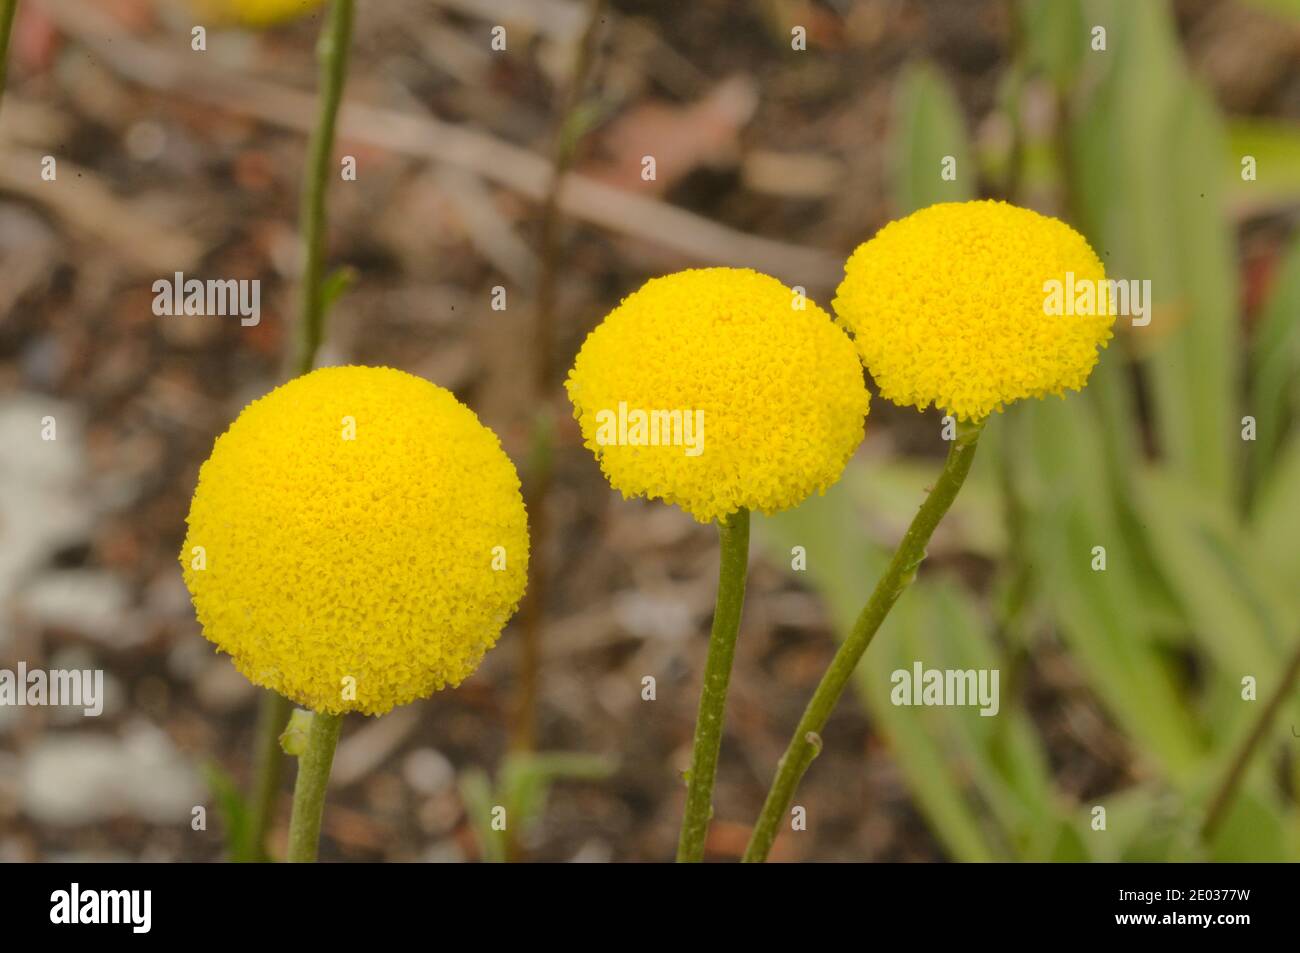 Swamp Billybuttons Craspedia paludicola Asteraceae Photographed in Tasmania, Australia Stock Photo